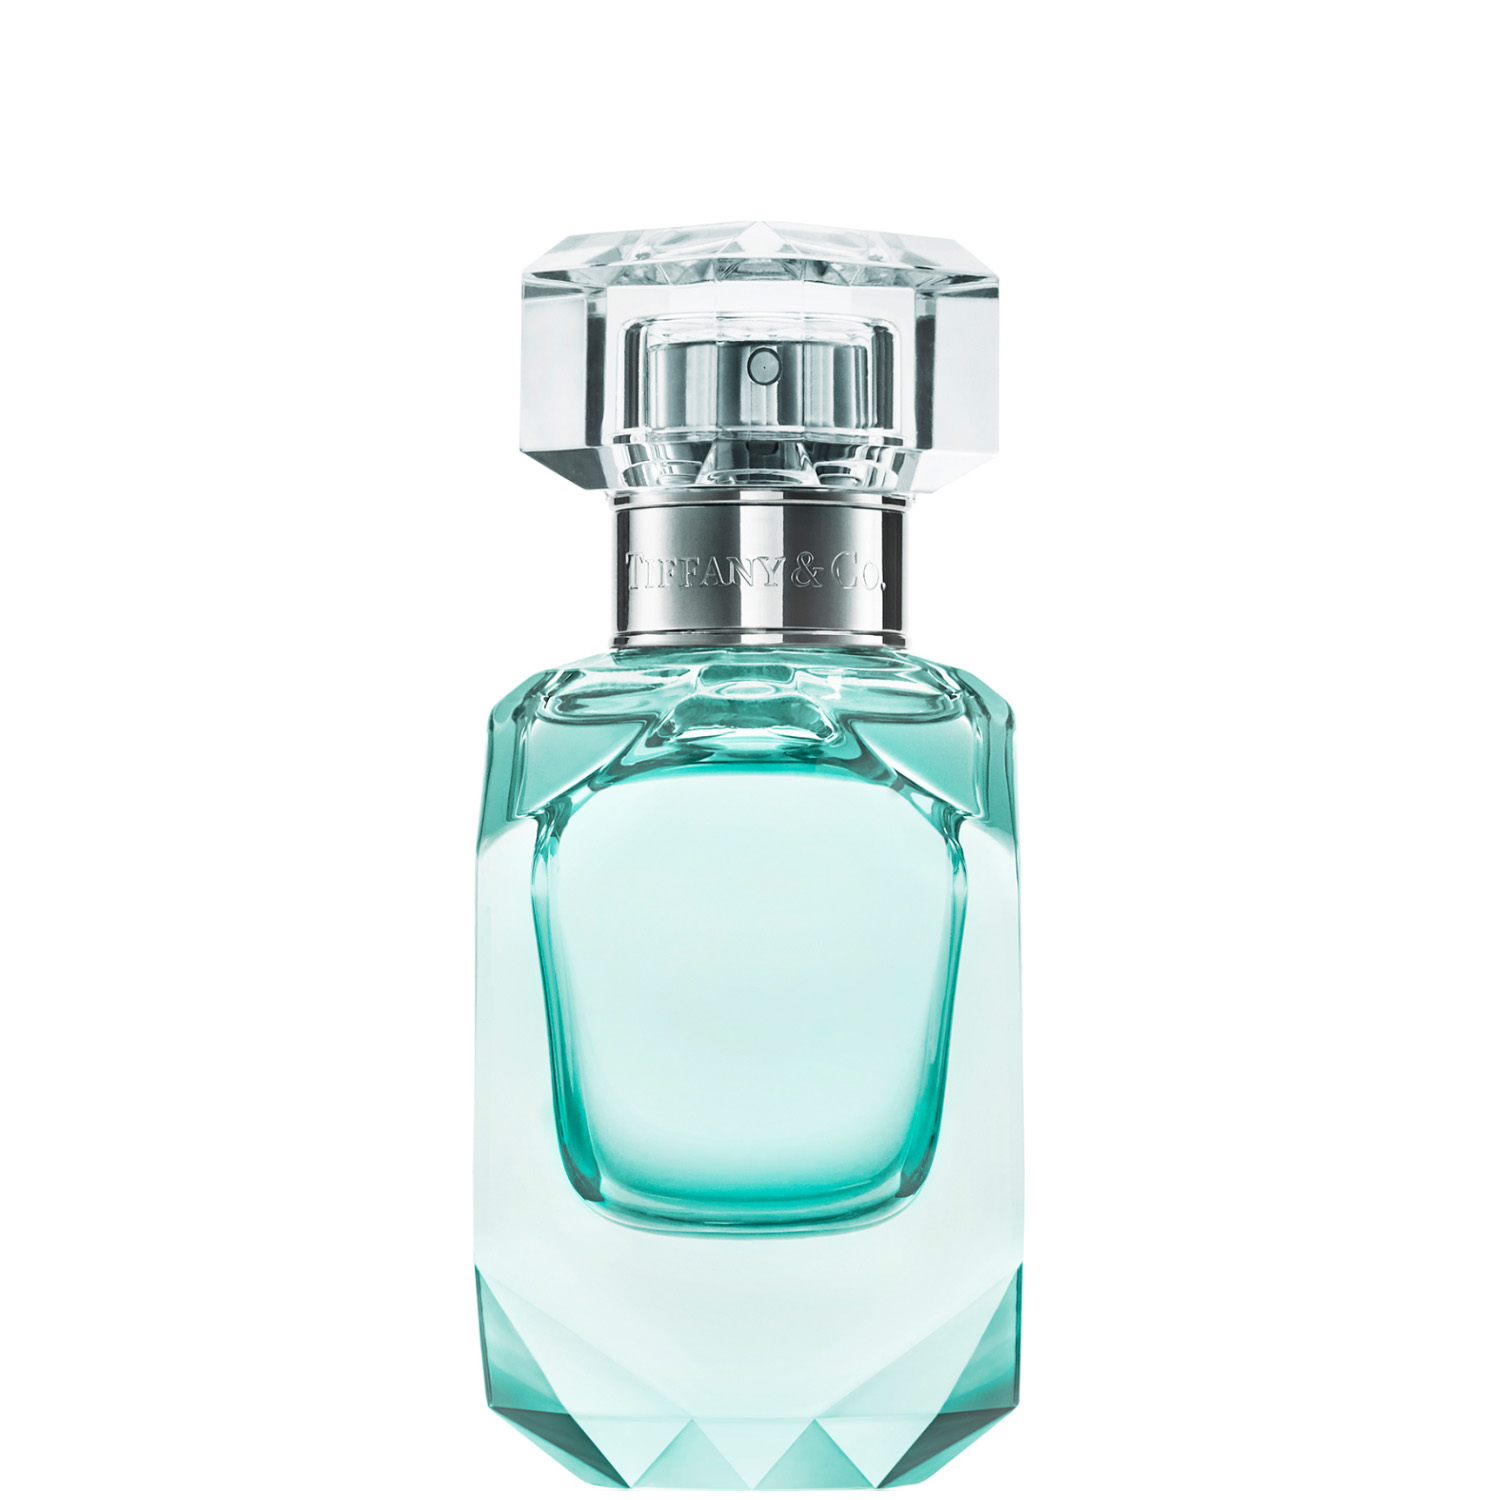 Tiffany & Co. Intense Eau de Parfum 30ml